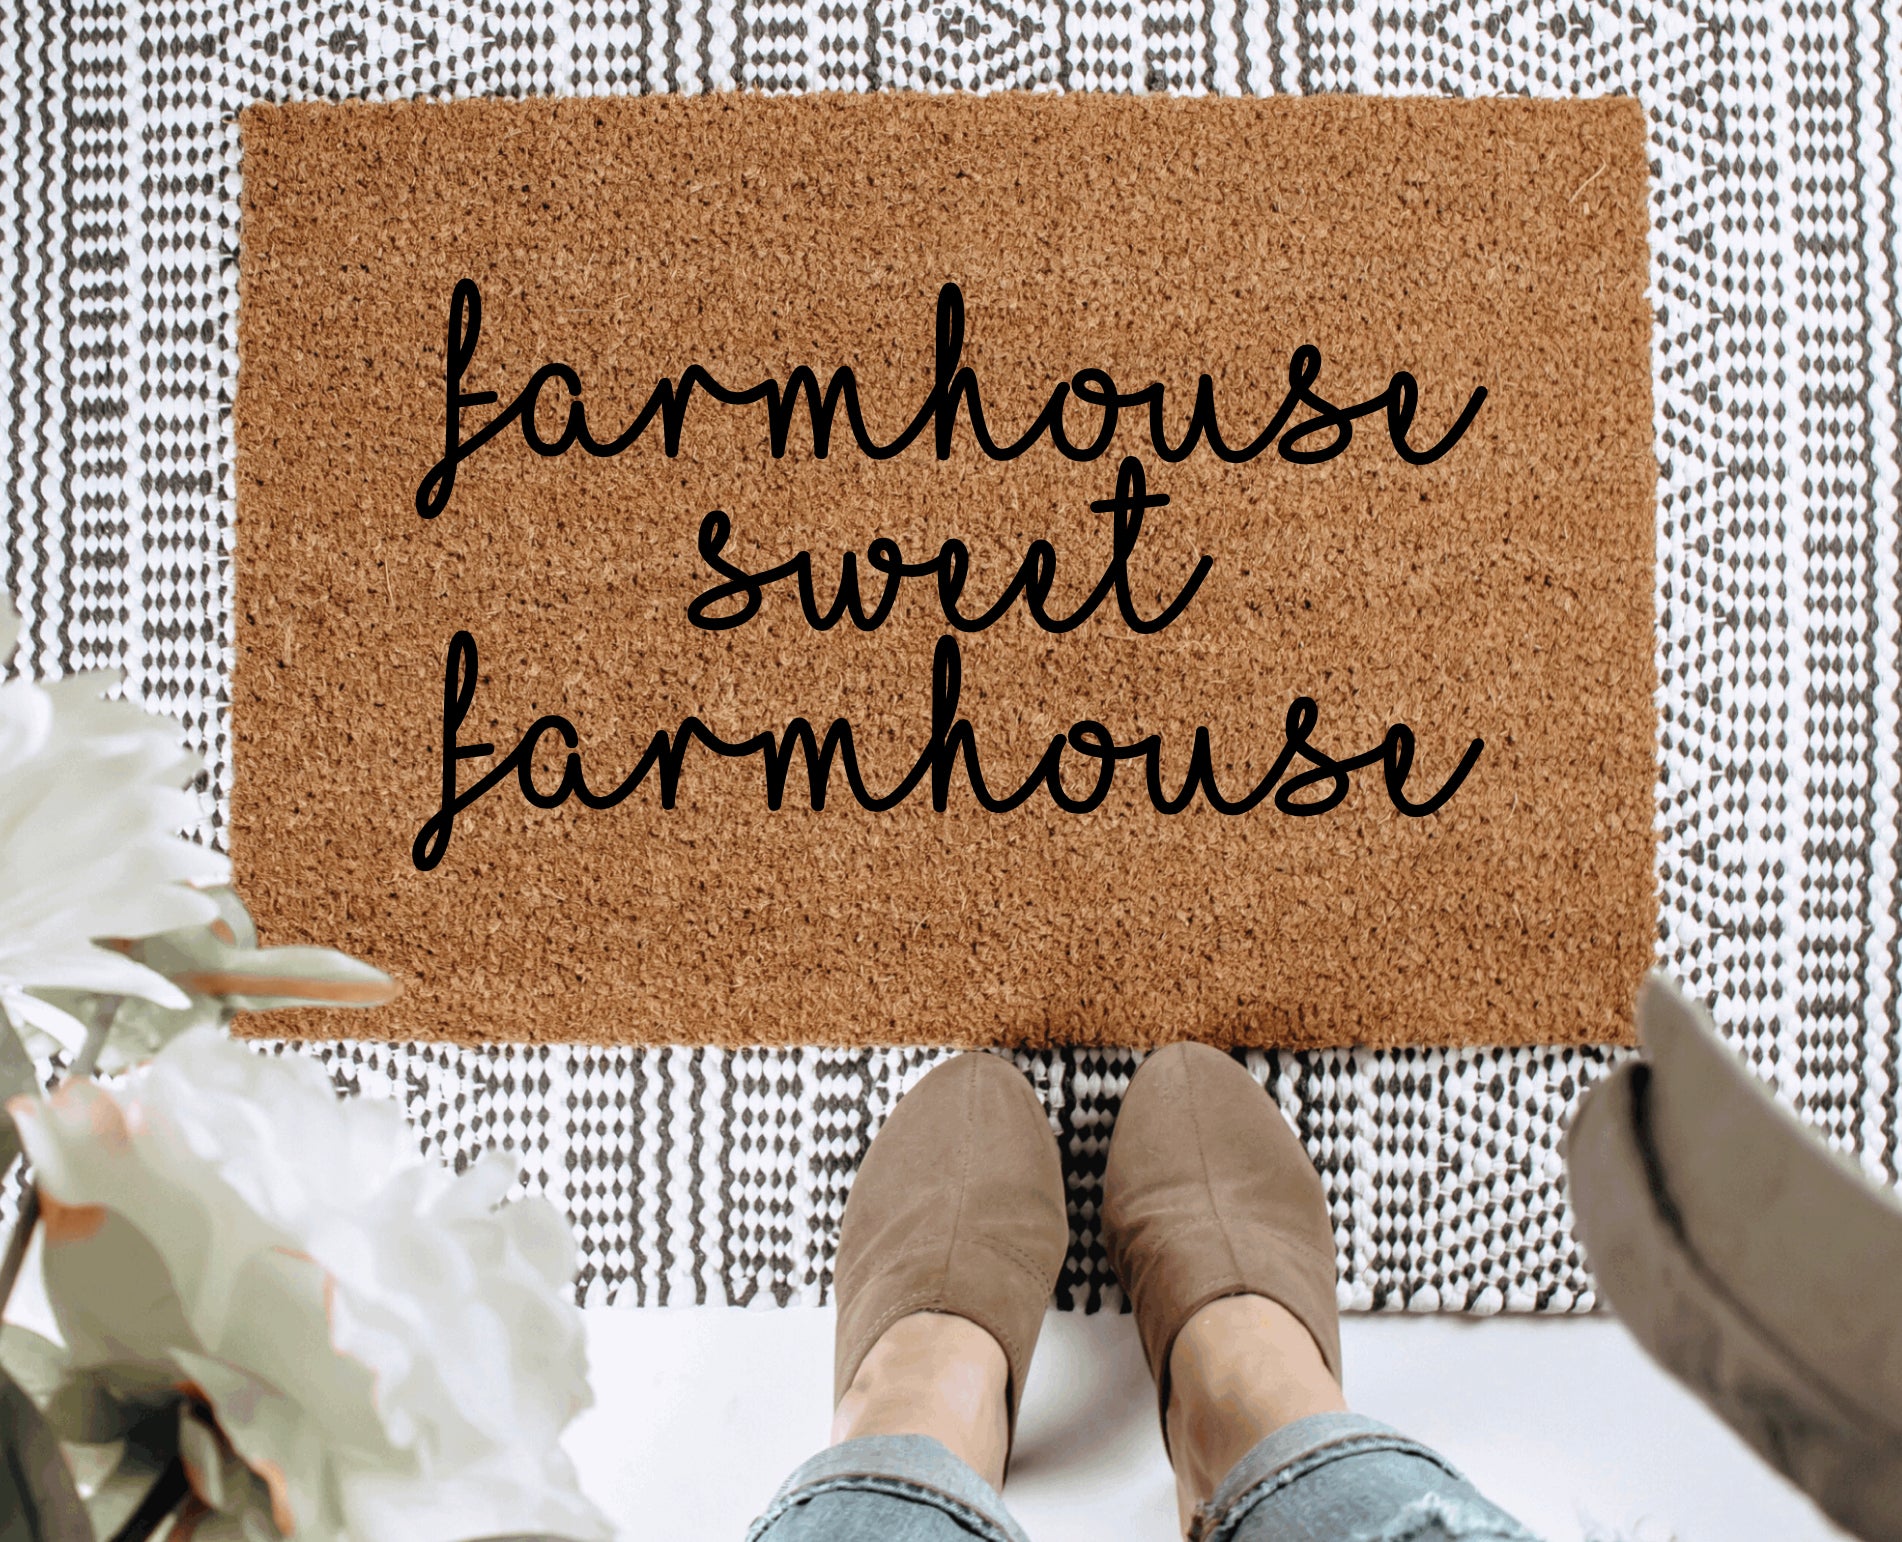 Farmhouse Sweet Farmhouse